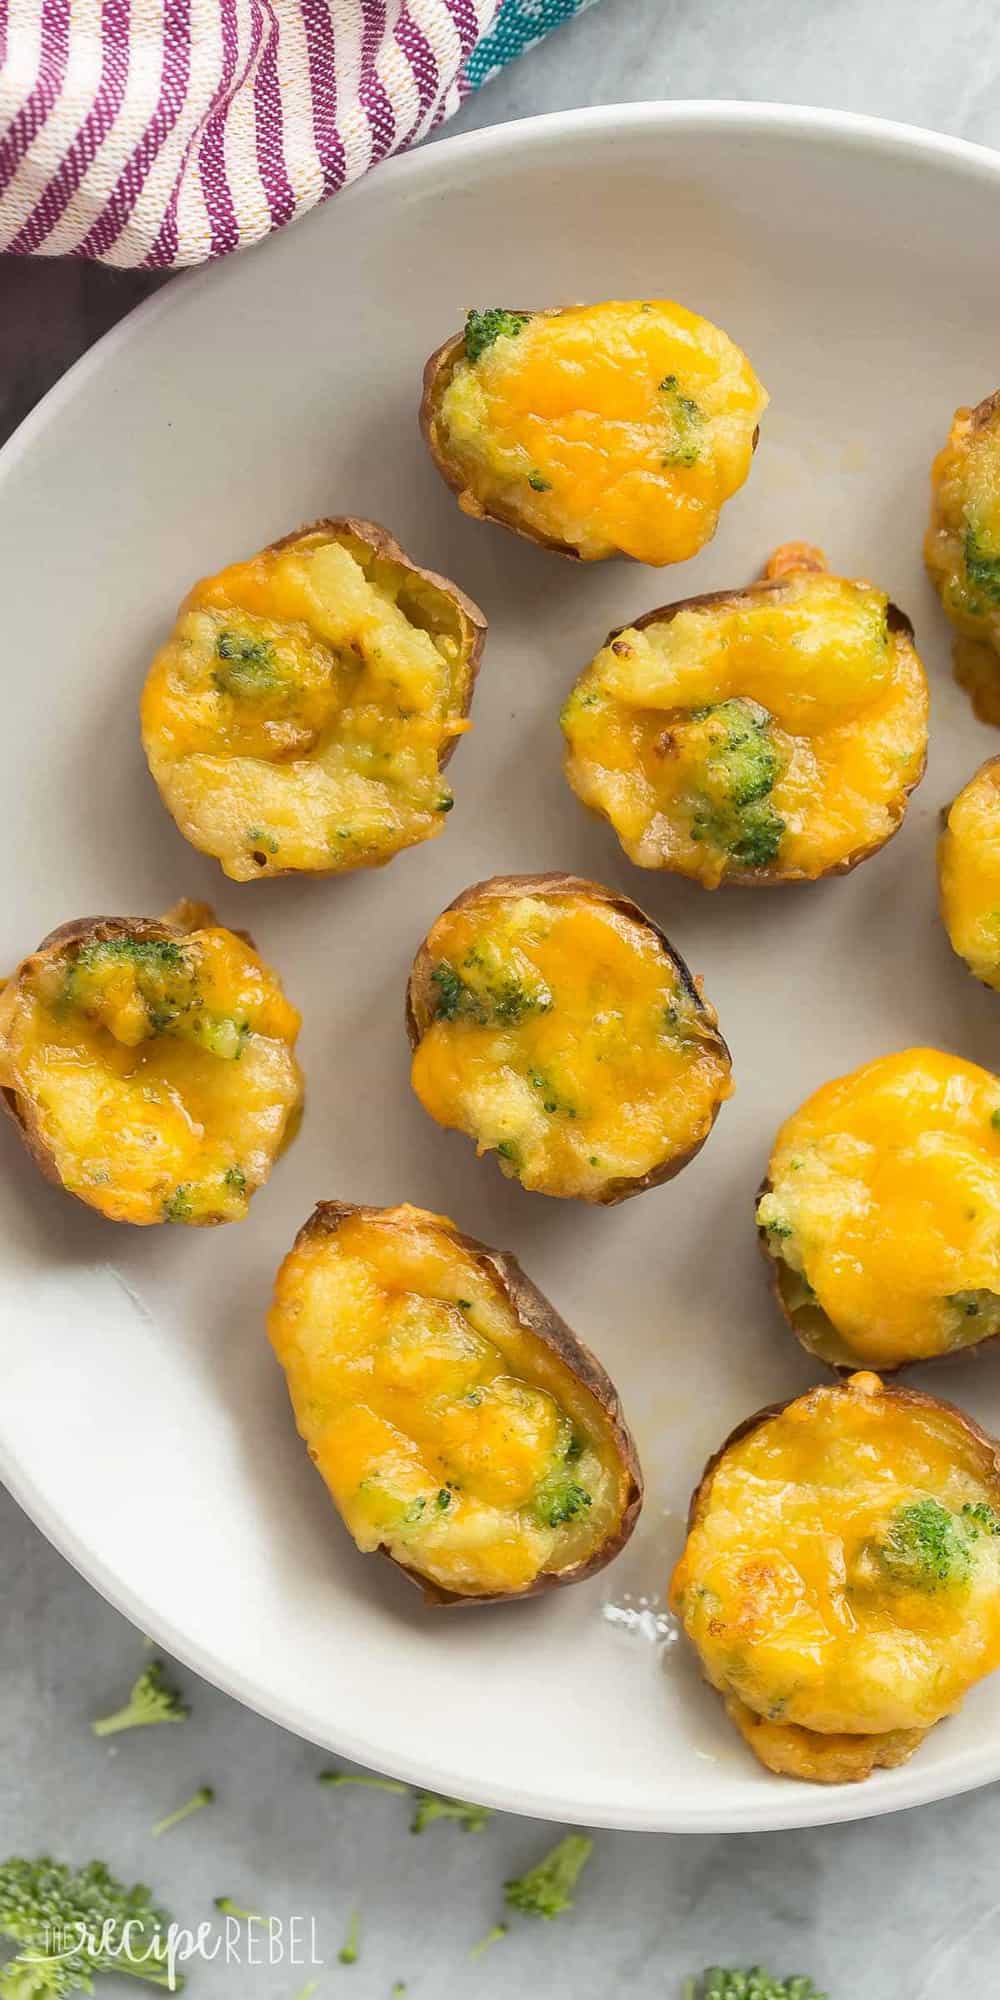 small broccoli cheddar twice baked potatoes overhead on grey plate